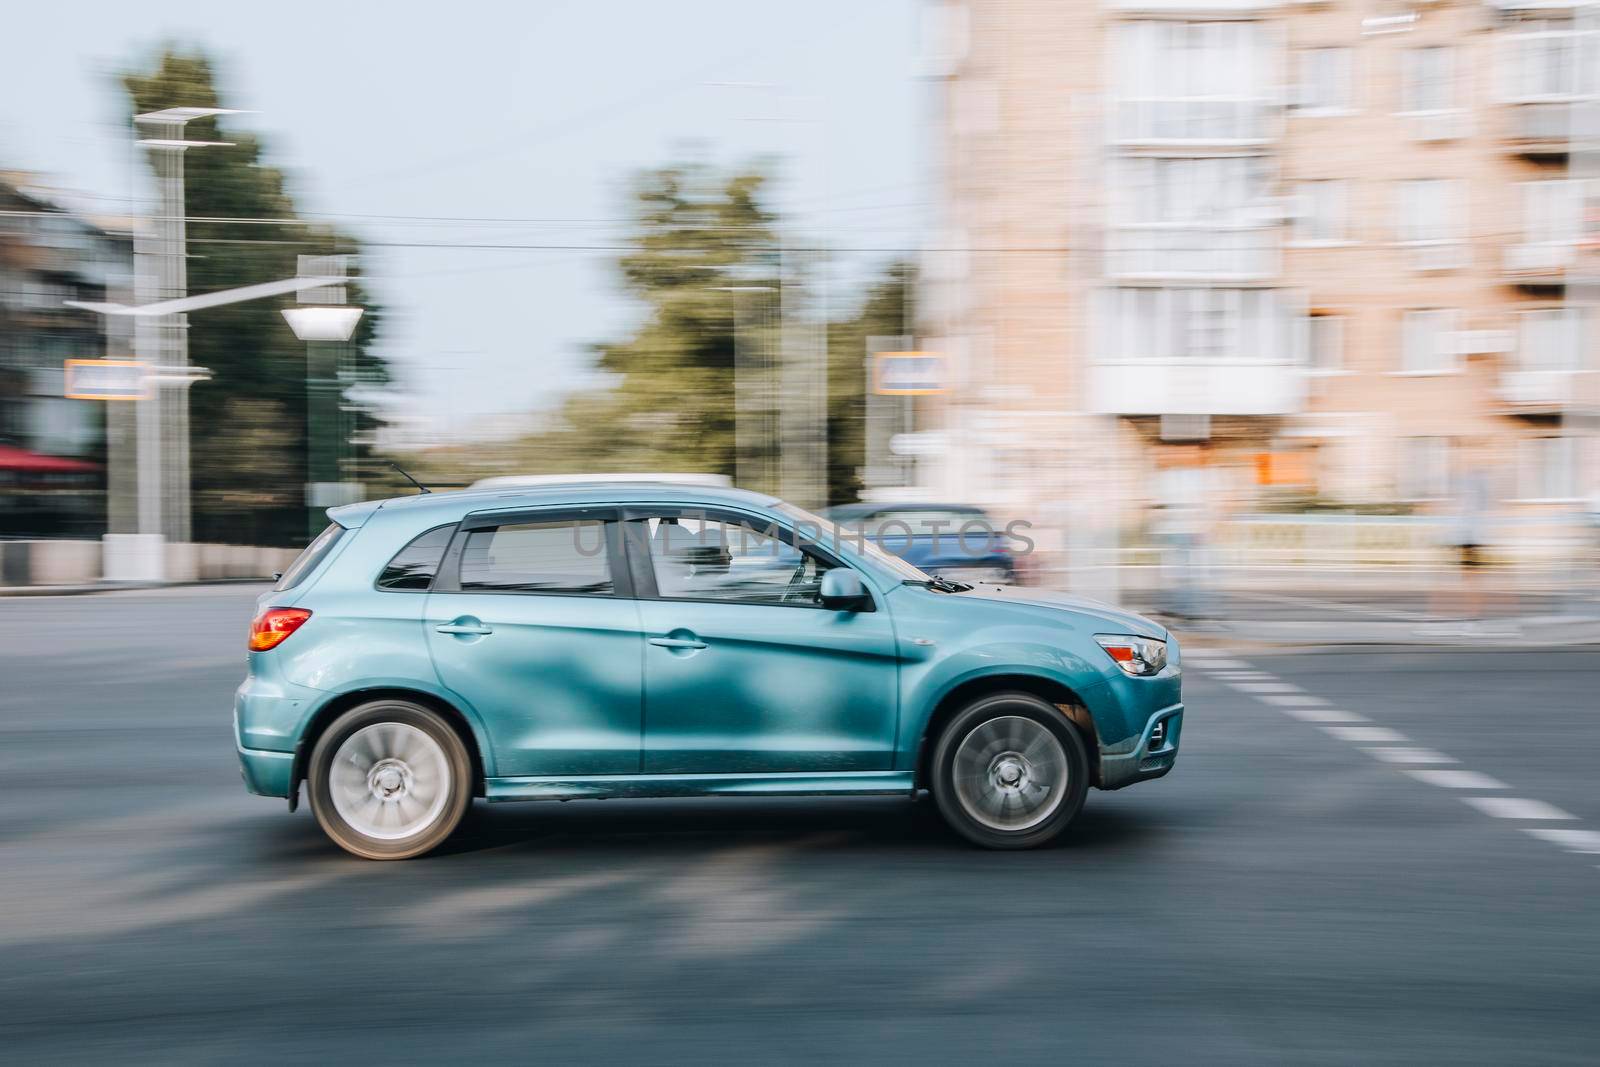 Ukraine, Kyiv - 16 July 2021: Green Mitsubishi car moving on the street. Editorial by Yuriy_Vlasenko